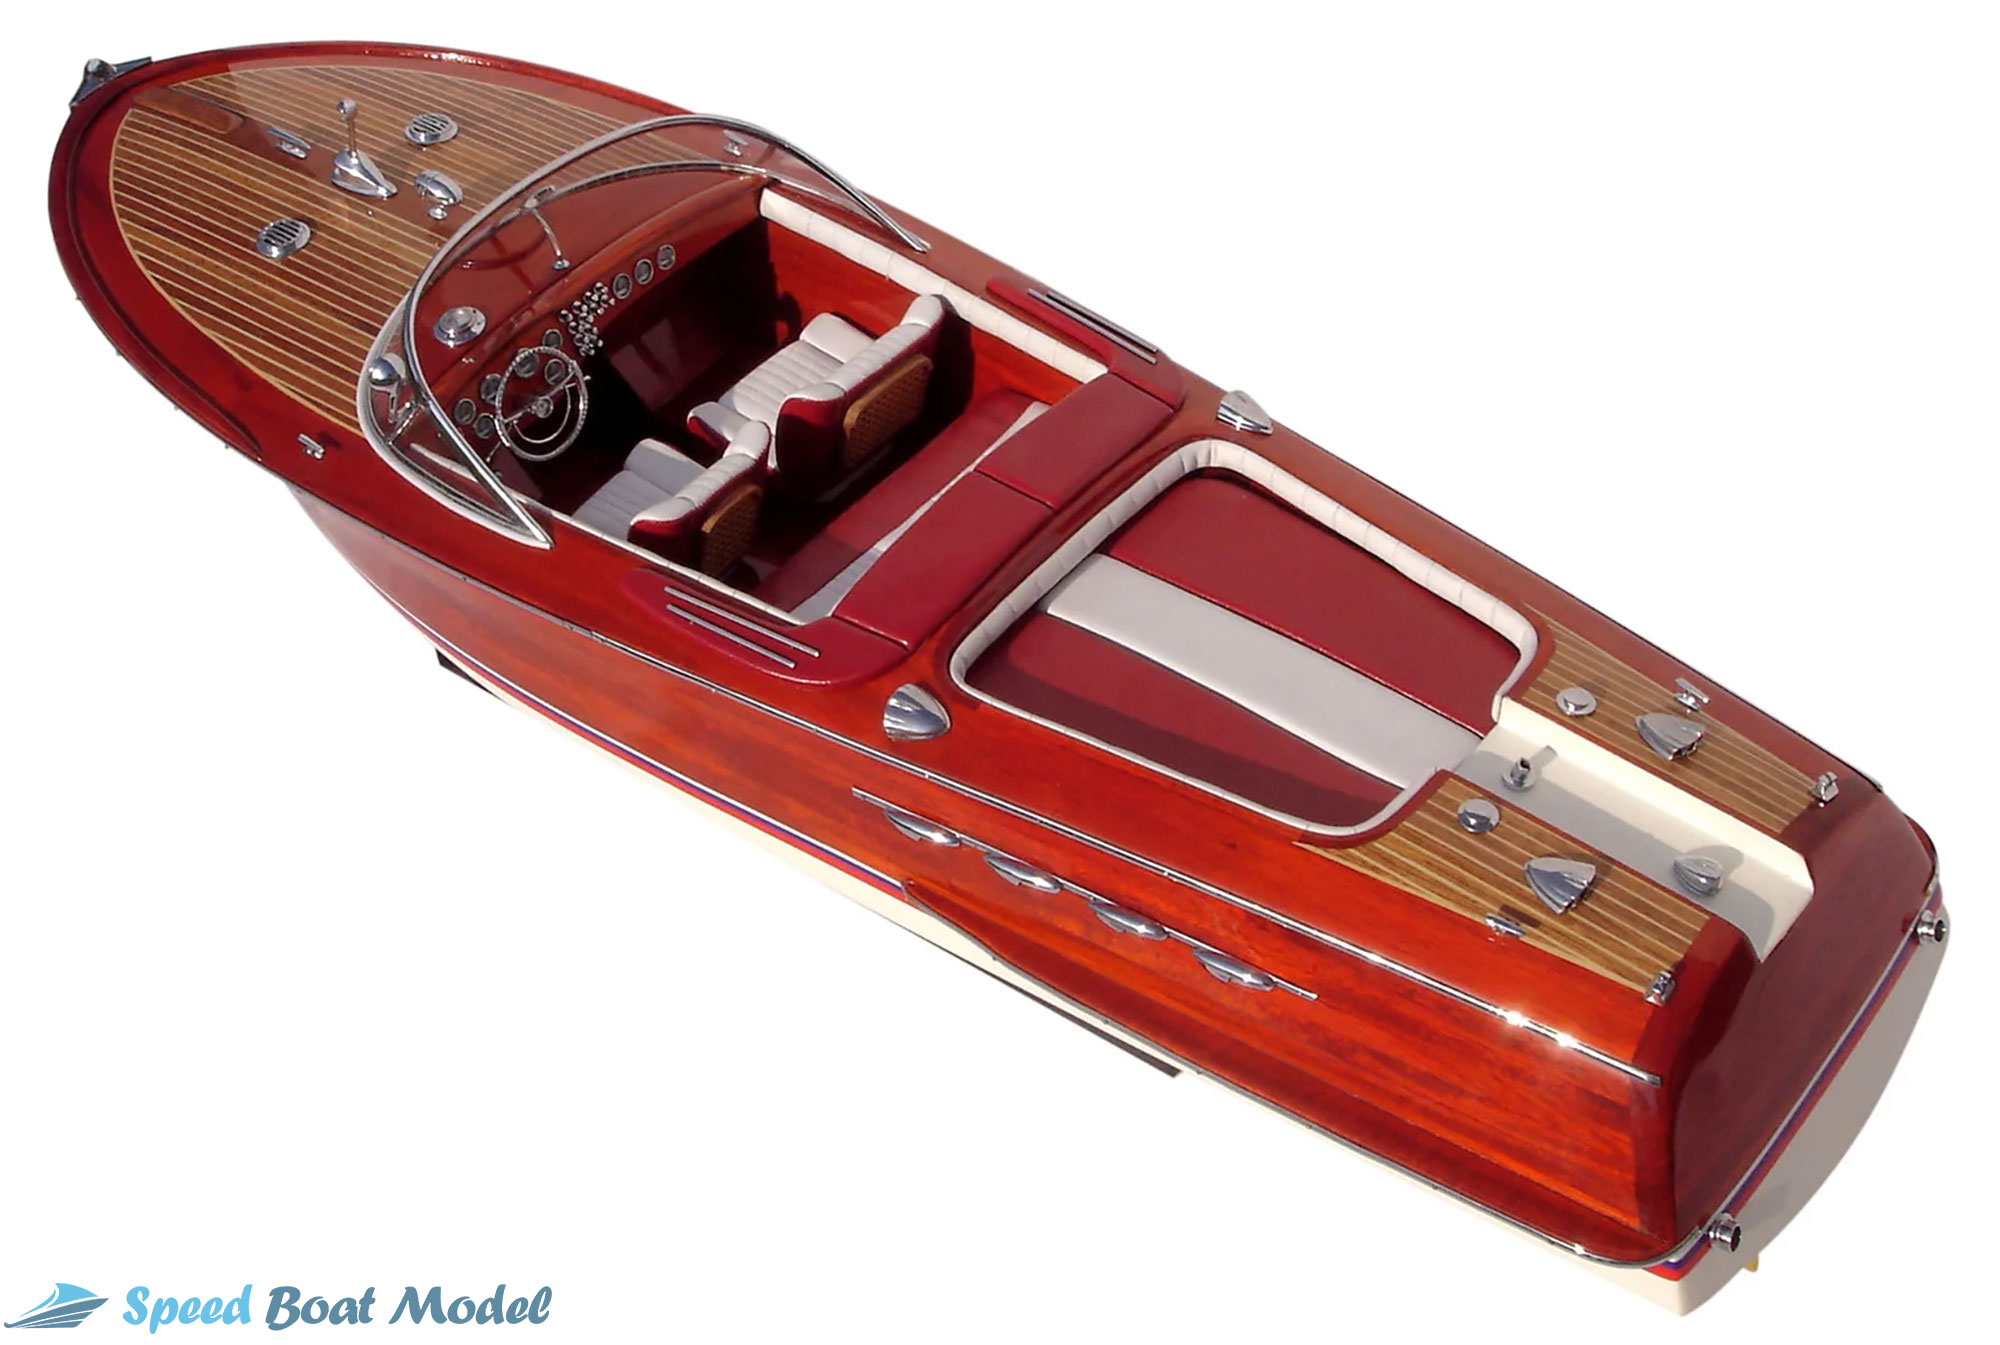 Red Super Riva Aquarama Classic Boat Model 34.2"